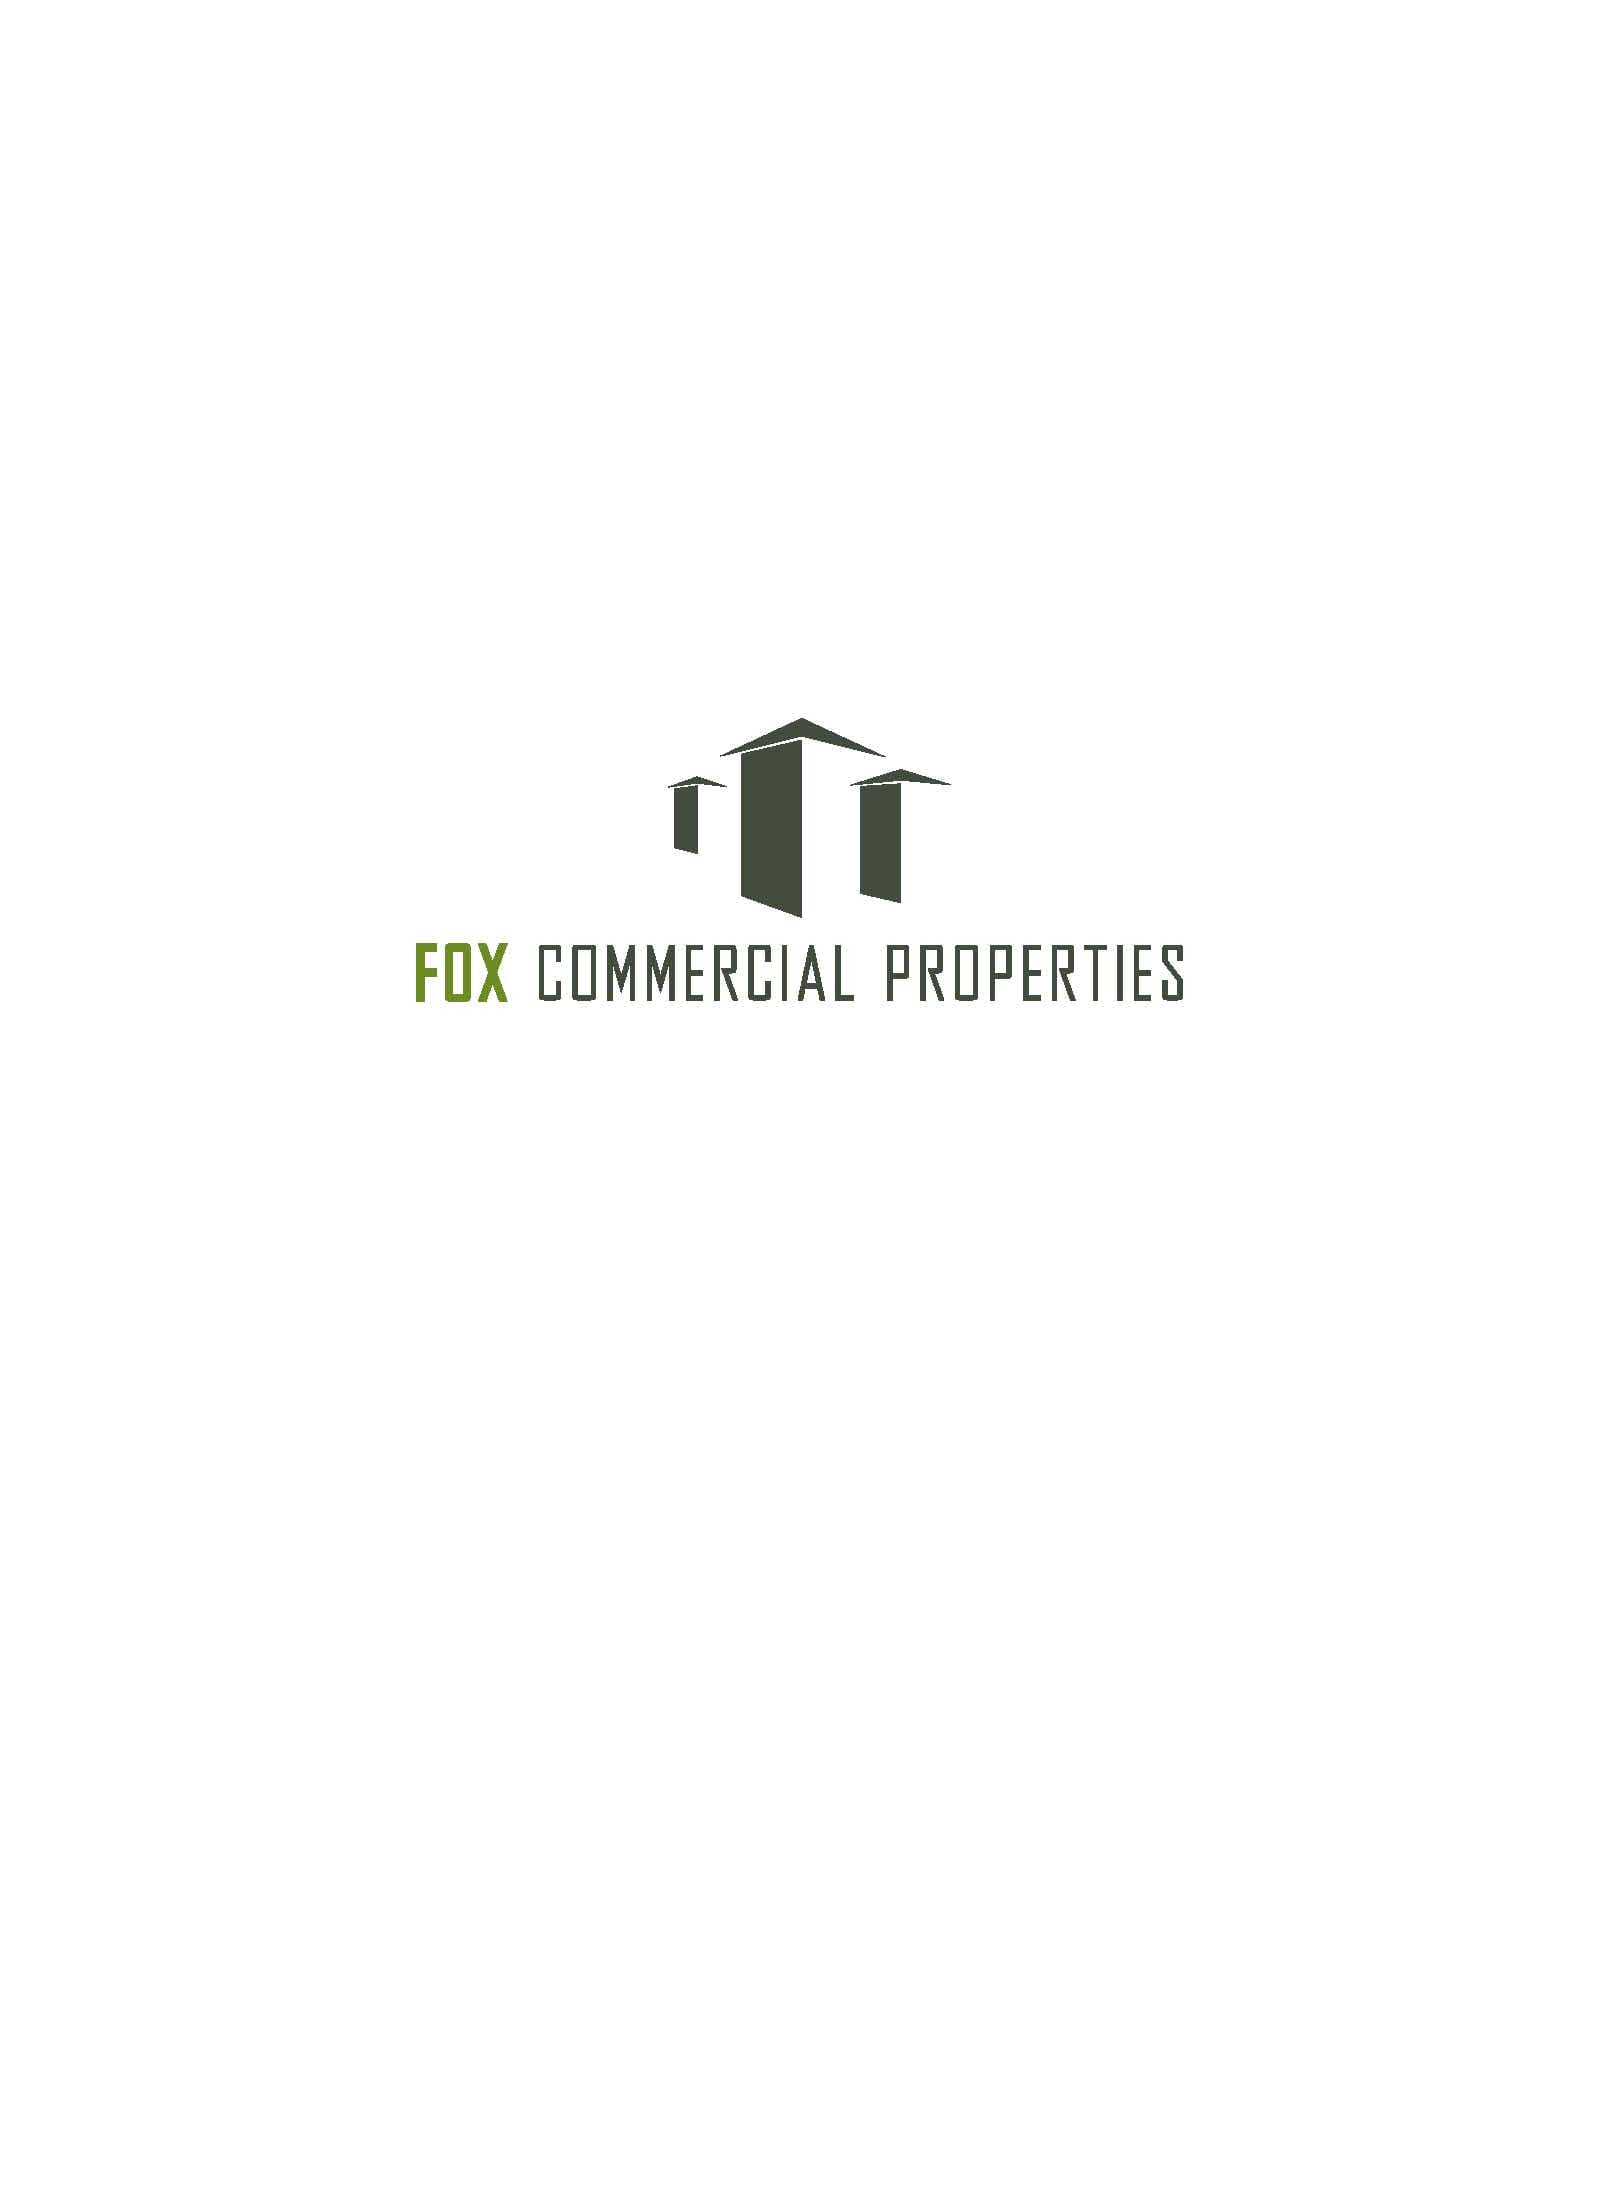 No Fox Logo - Fox Commercial Properties logo no tagline Green - ULI South Carolina